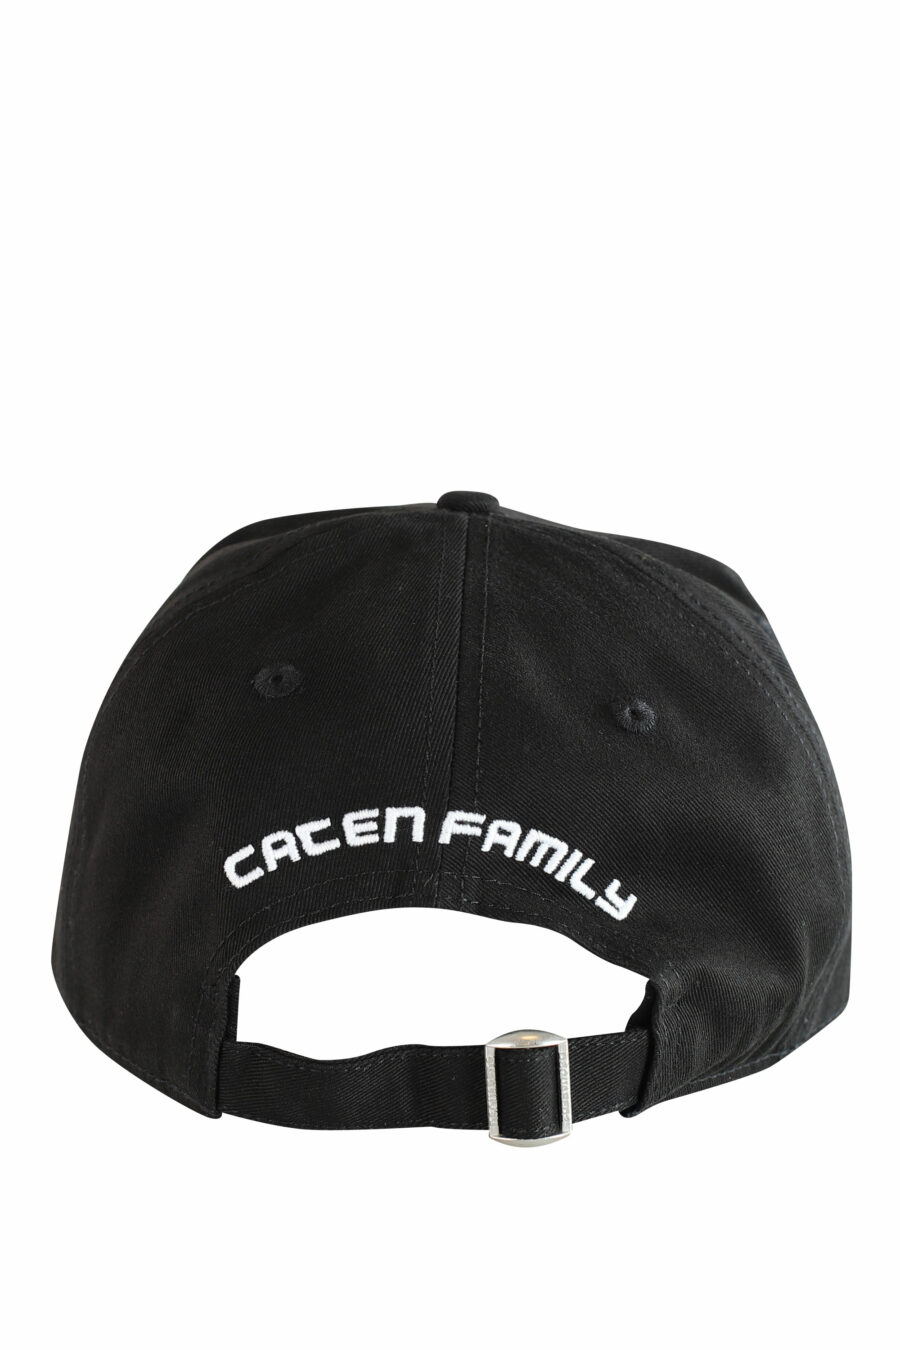 Gorra negra con logo blanco y hoja "cacen family" - IMG 1217